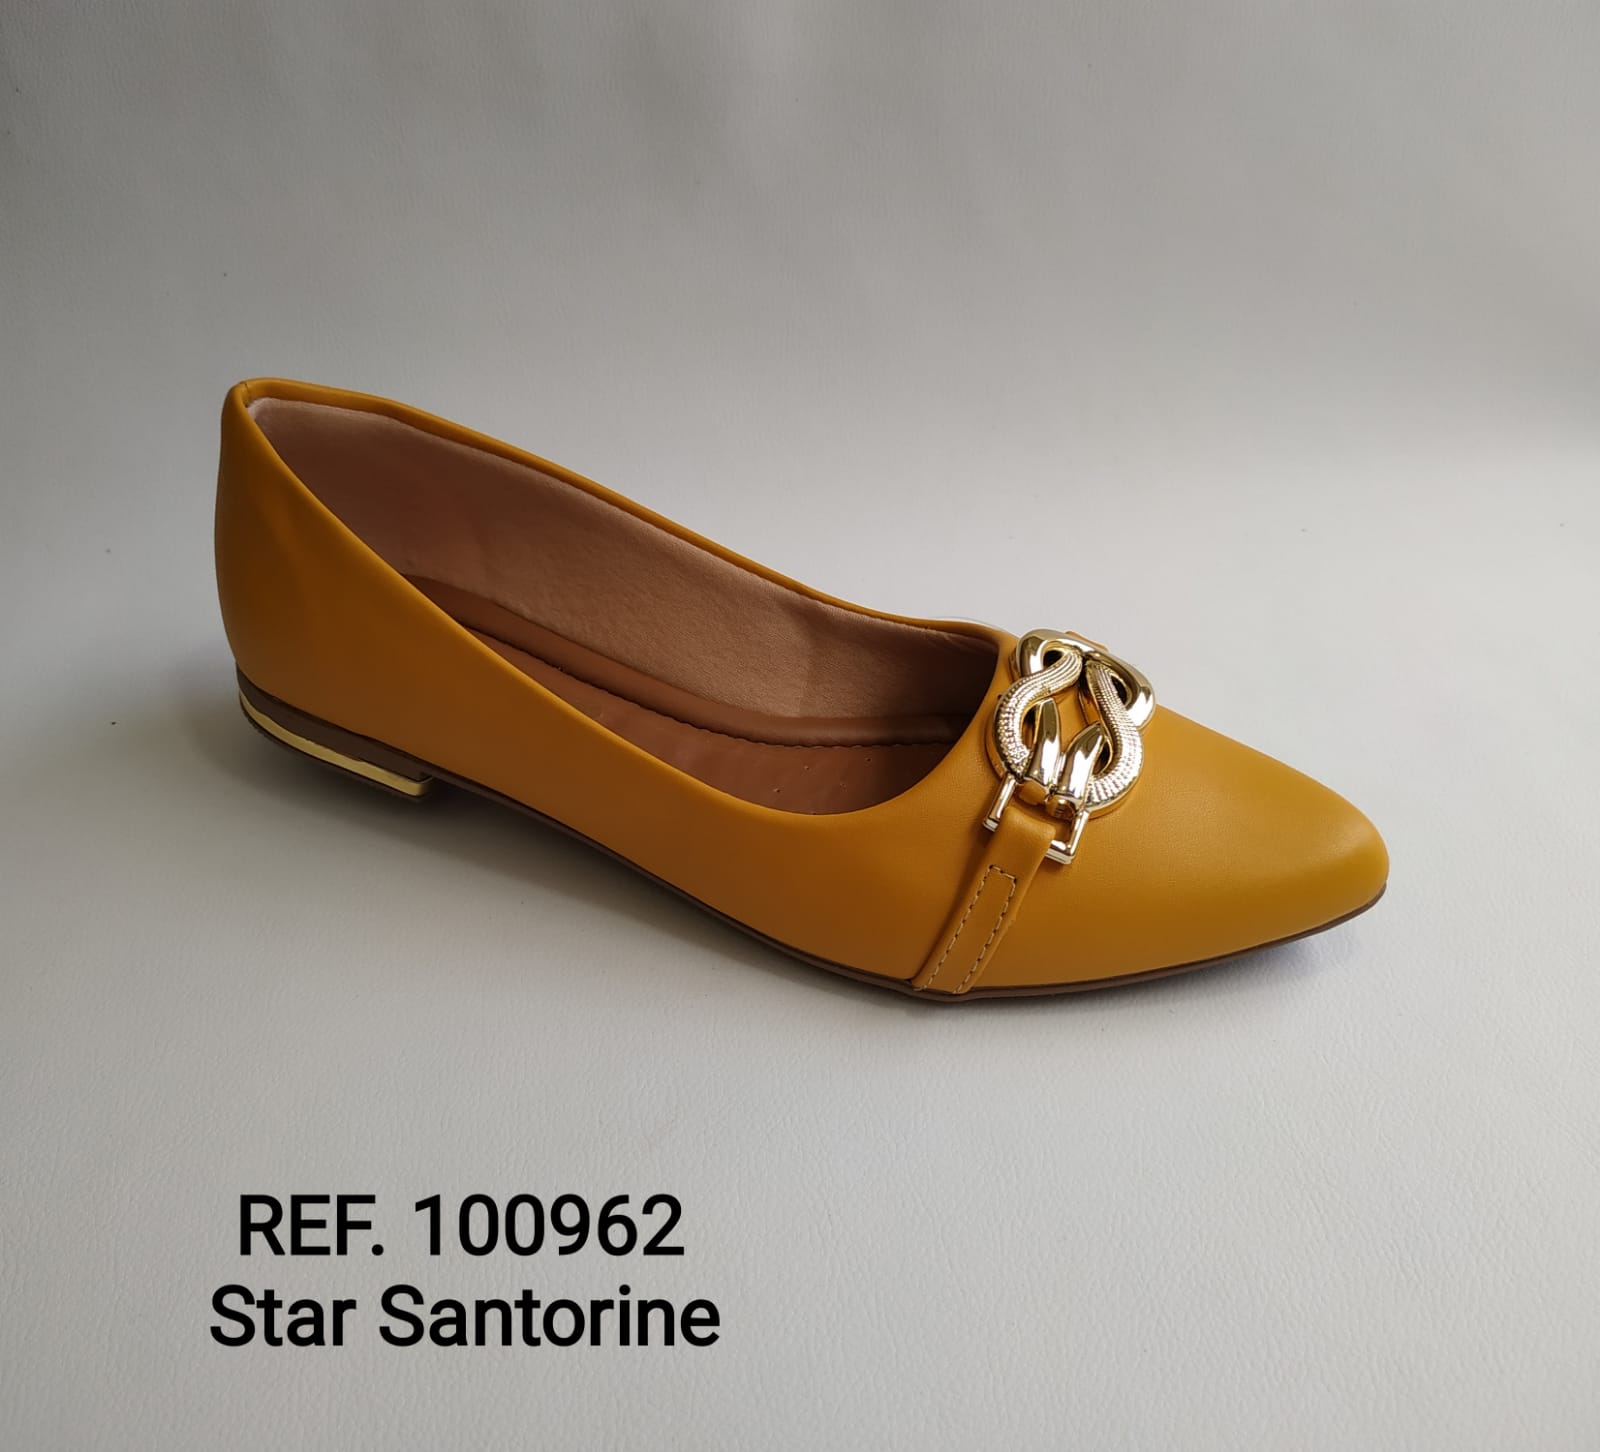 Ref. 100962 Star Santorine